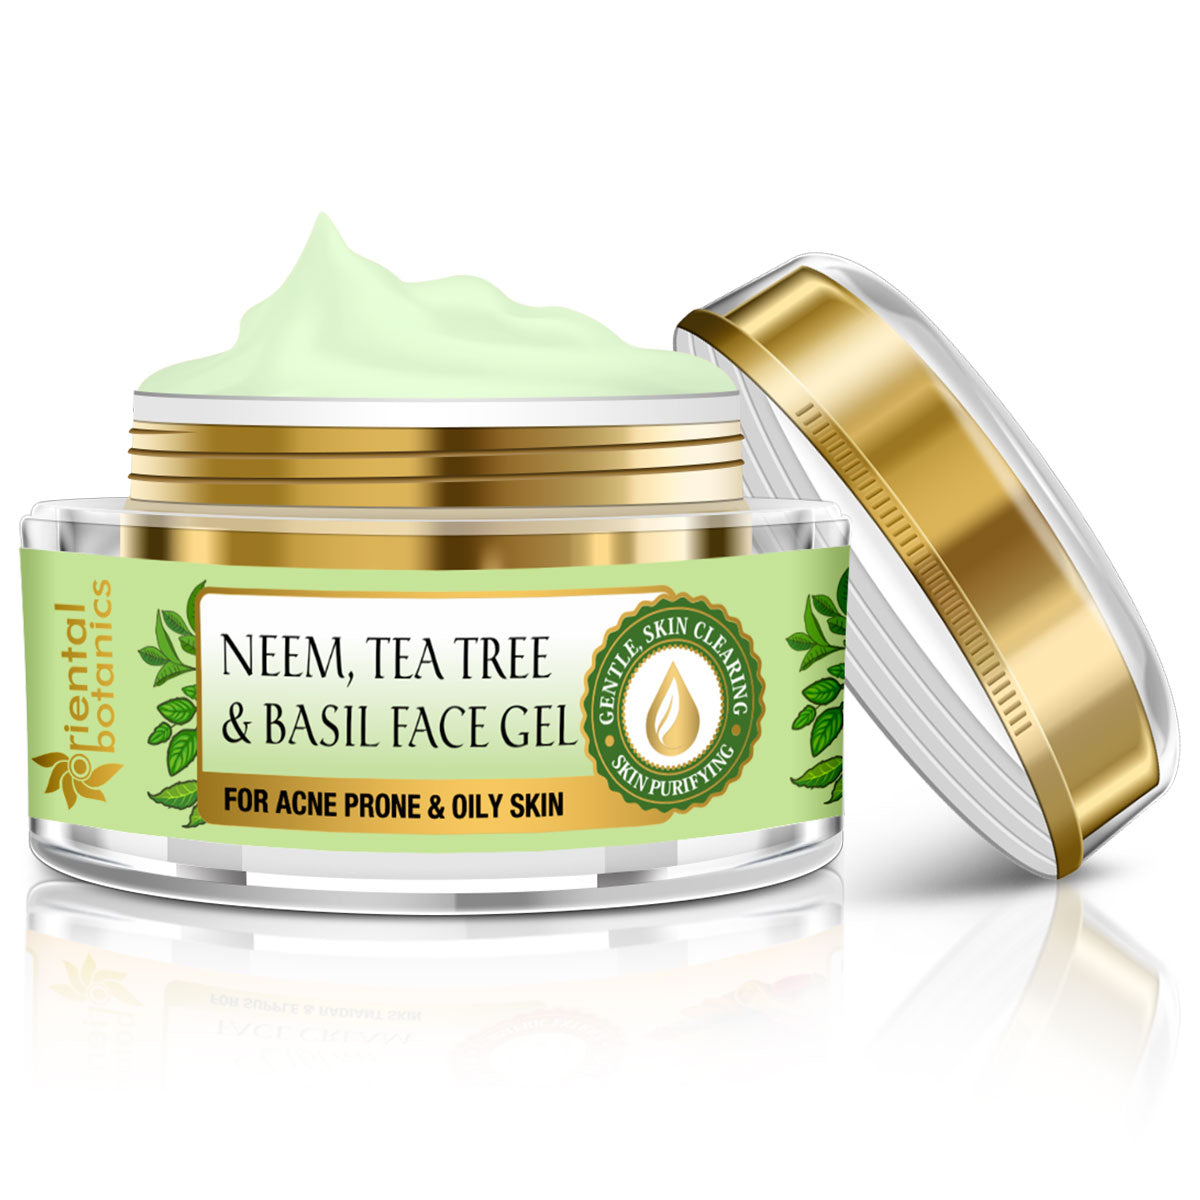 Oriental Botanics Neem, Tea Tree And Basil Anti Acne Night Face Night Gel Cream - For Oily Skin, 50g